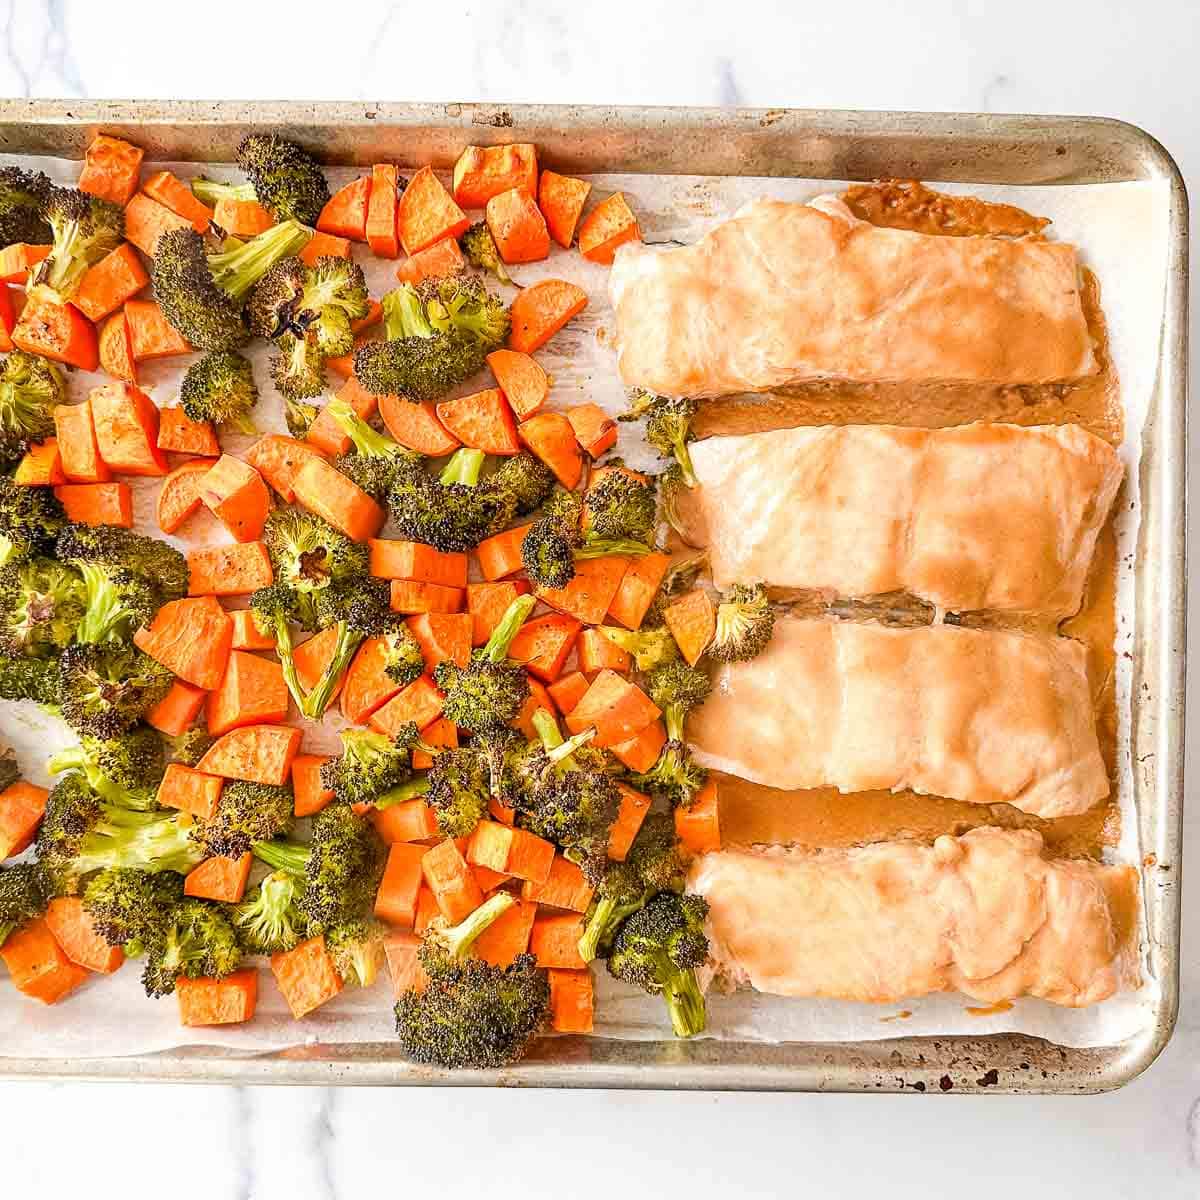 Sheet pan salmon, carrots, and broccoli with a maple dijon glaze.